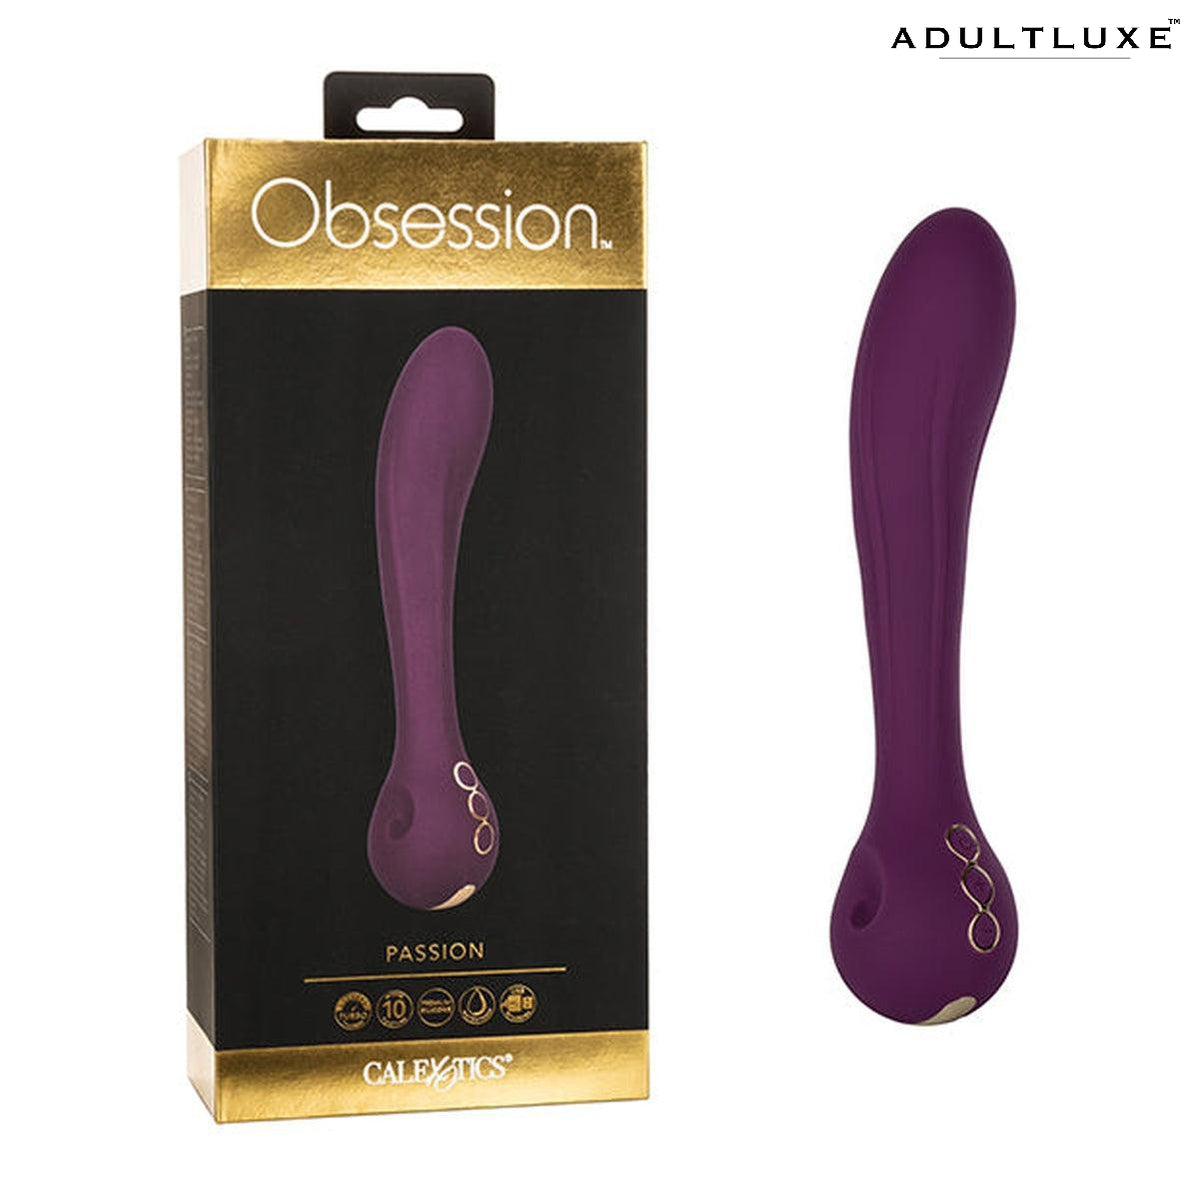 Obsession Passion Vibrator